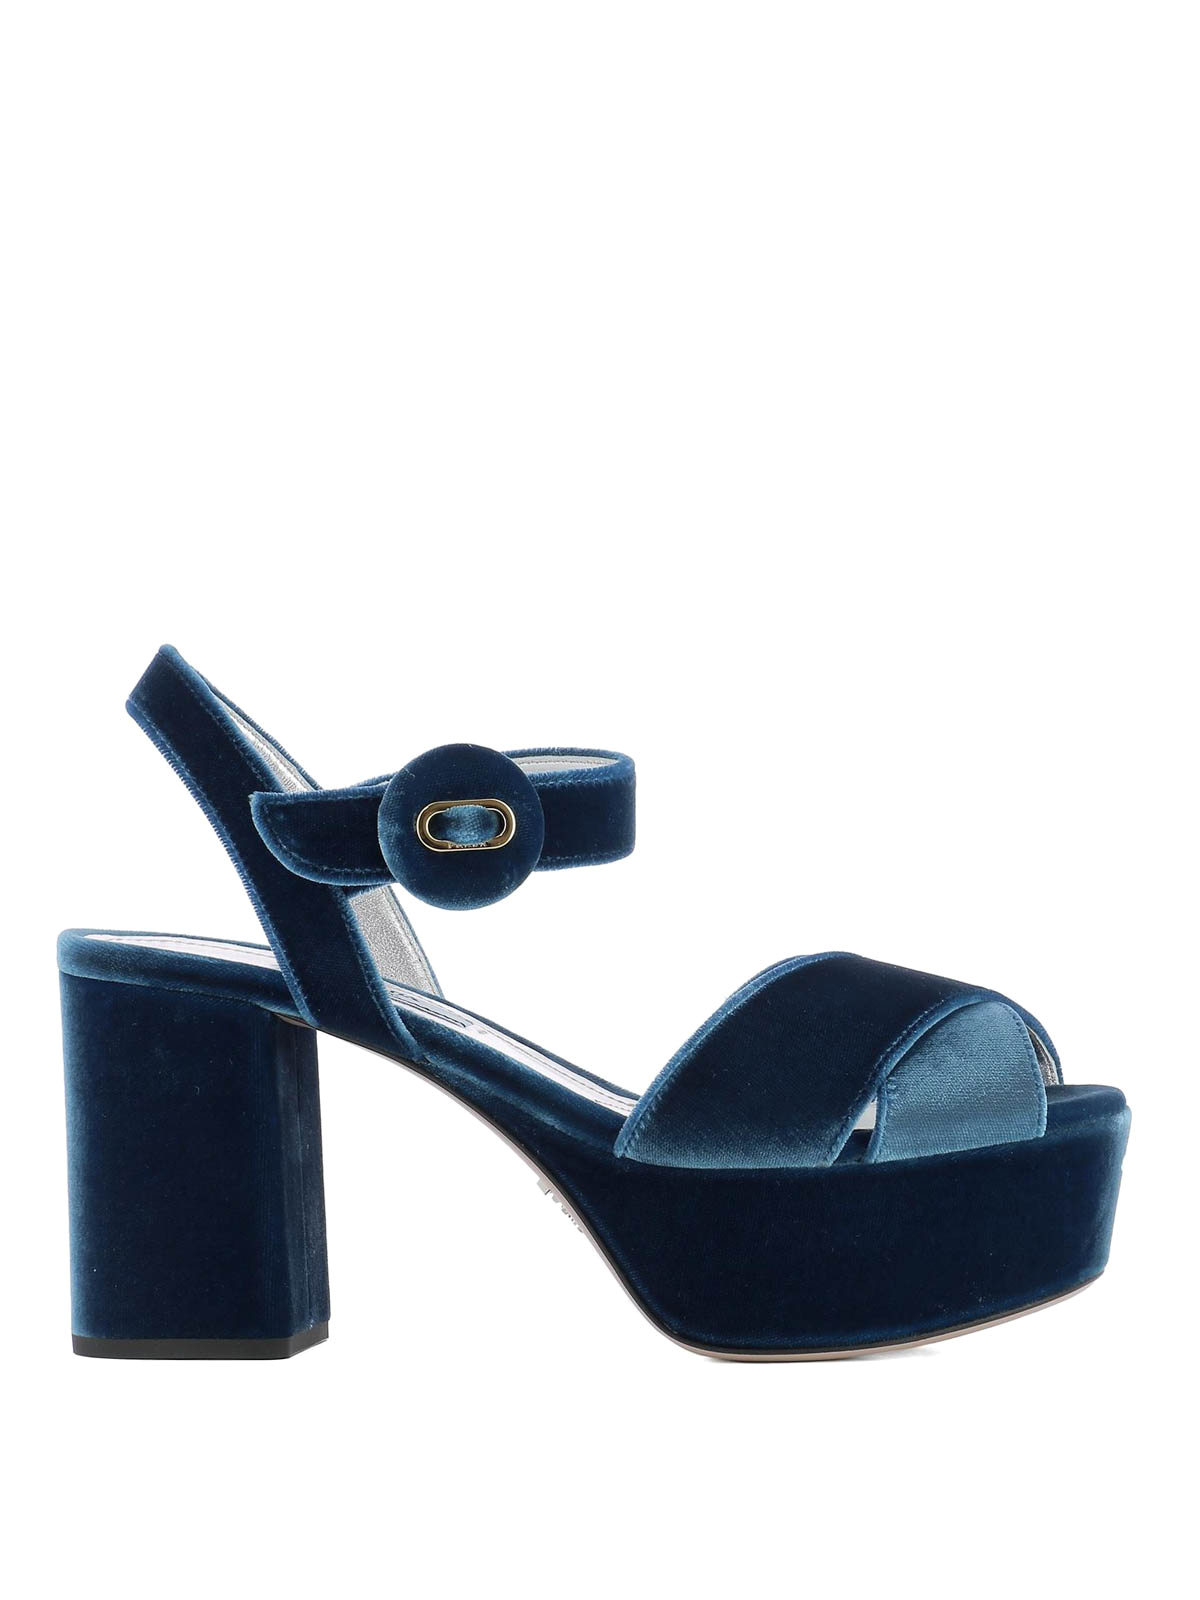 Sandals Prada - Light blue velvet platform sandals - 1XP985F085068F0215